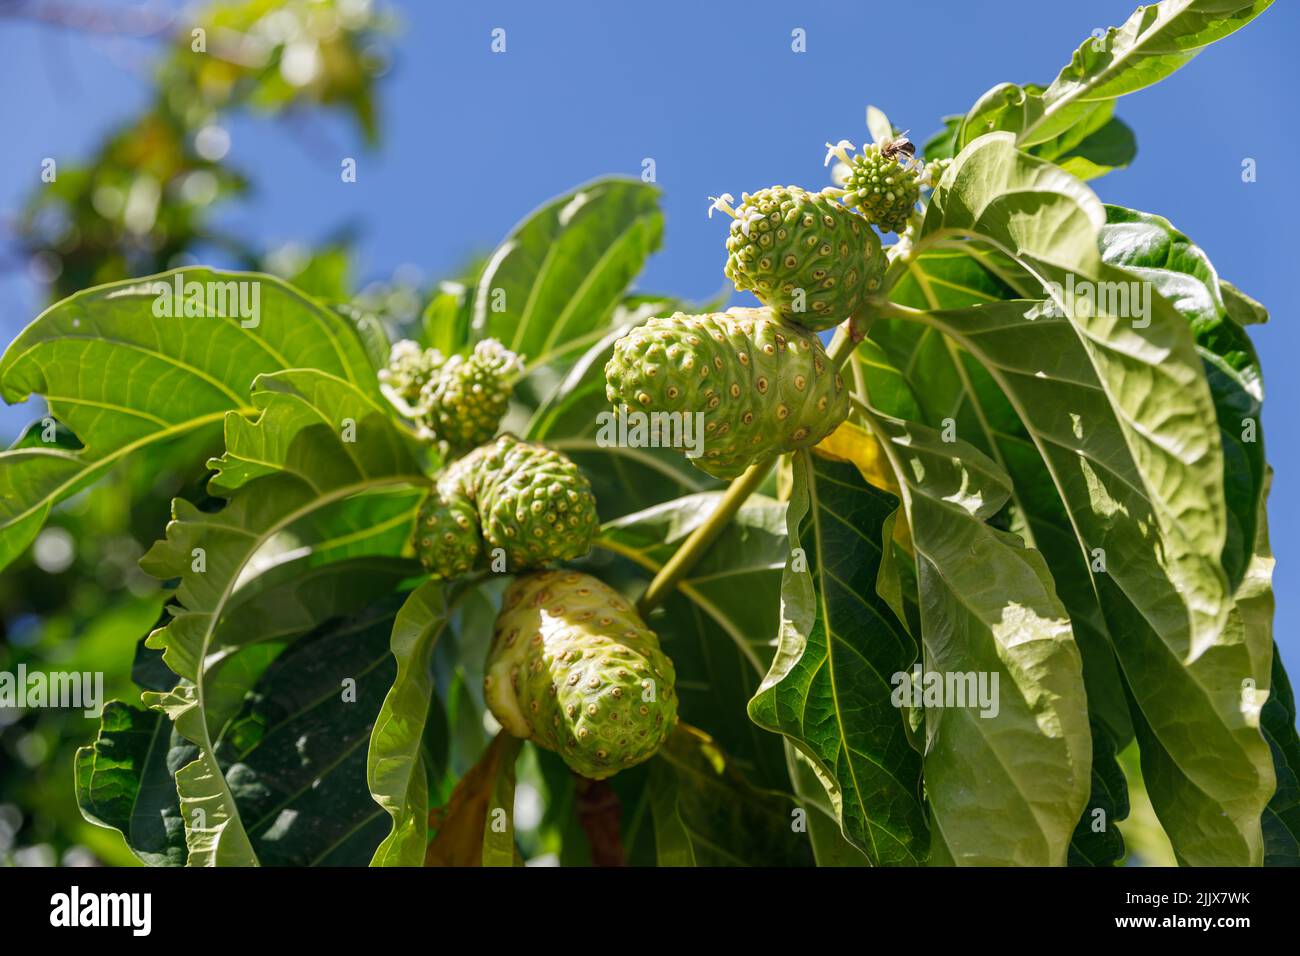 Noni tree, Morinda citrifolia. A medicinal fruit with unique properties. Stock Photo